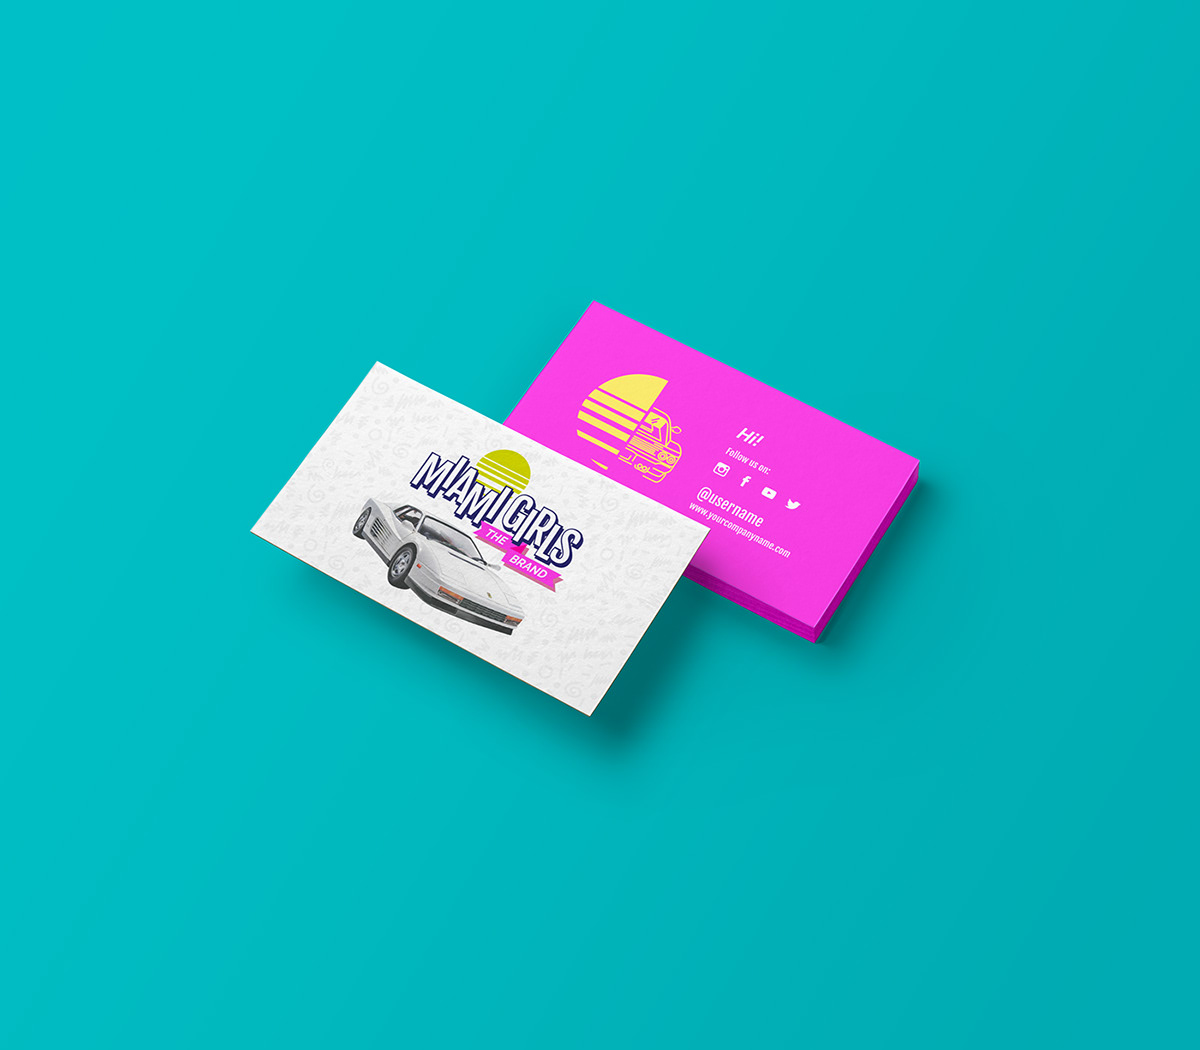 free vector template branding  logo girls freebies free download flyer busines card